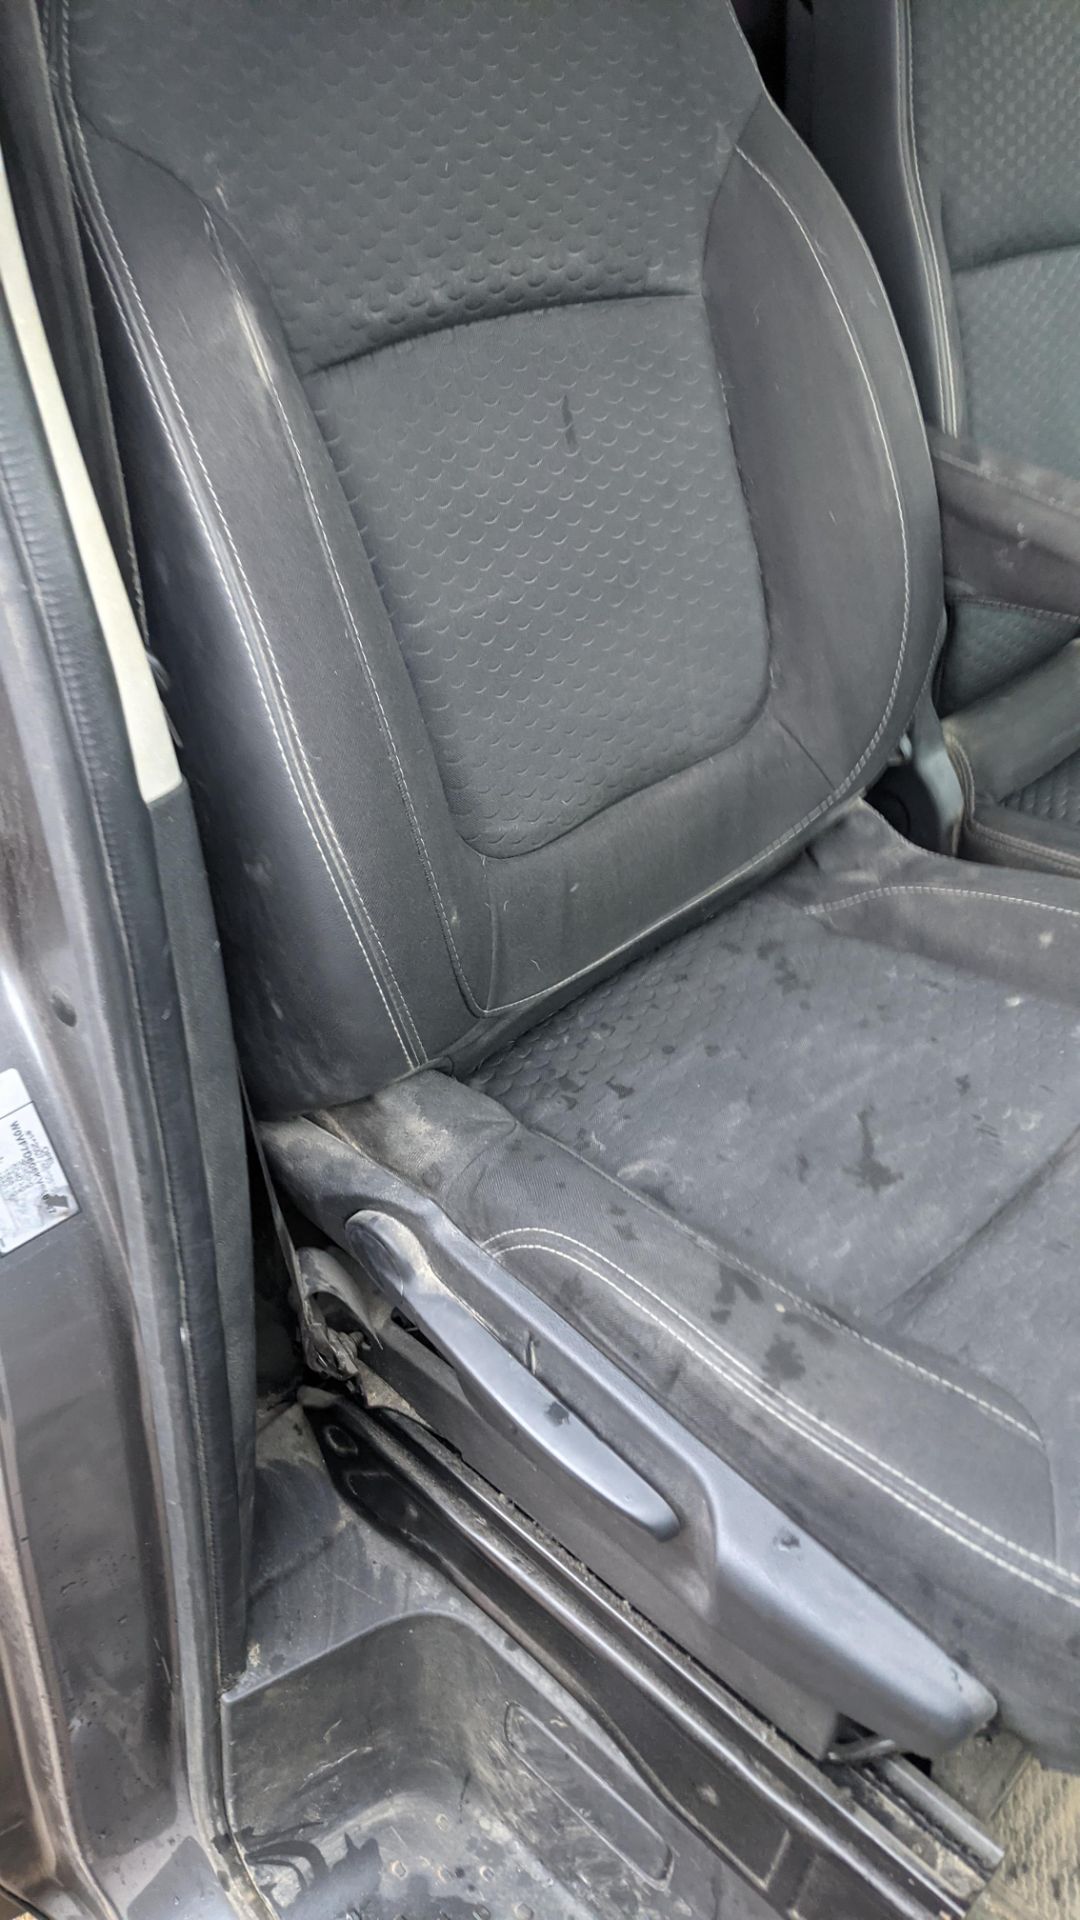 2019 Vauxhall Vivaro L2 2900 Sport CDTI BT SS panel van (Registration FD19 YUB) - Image 34 of 55